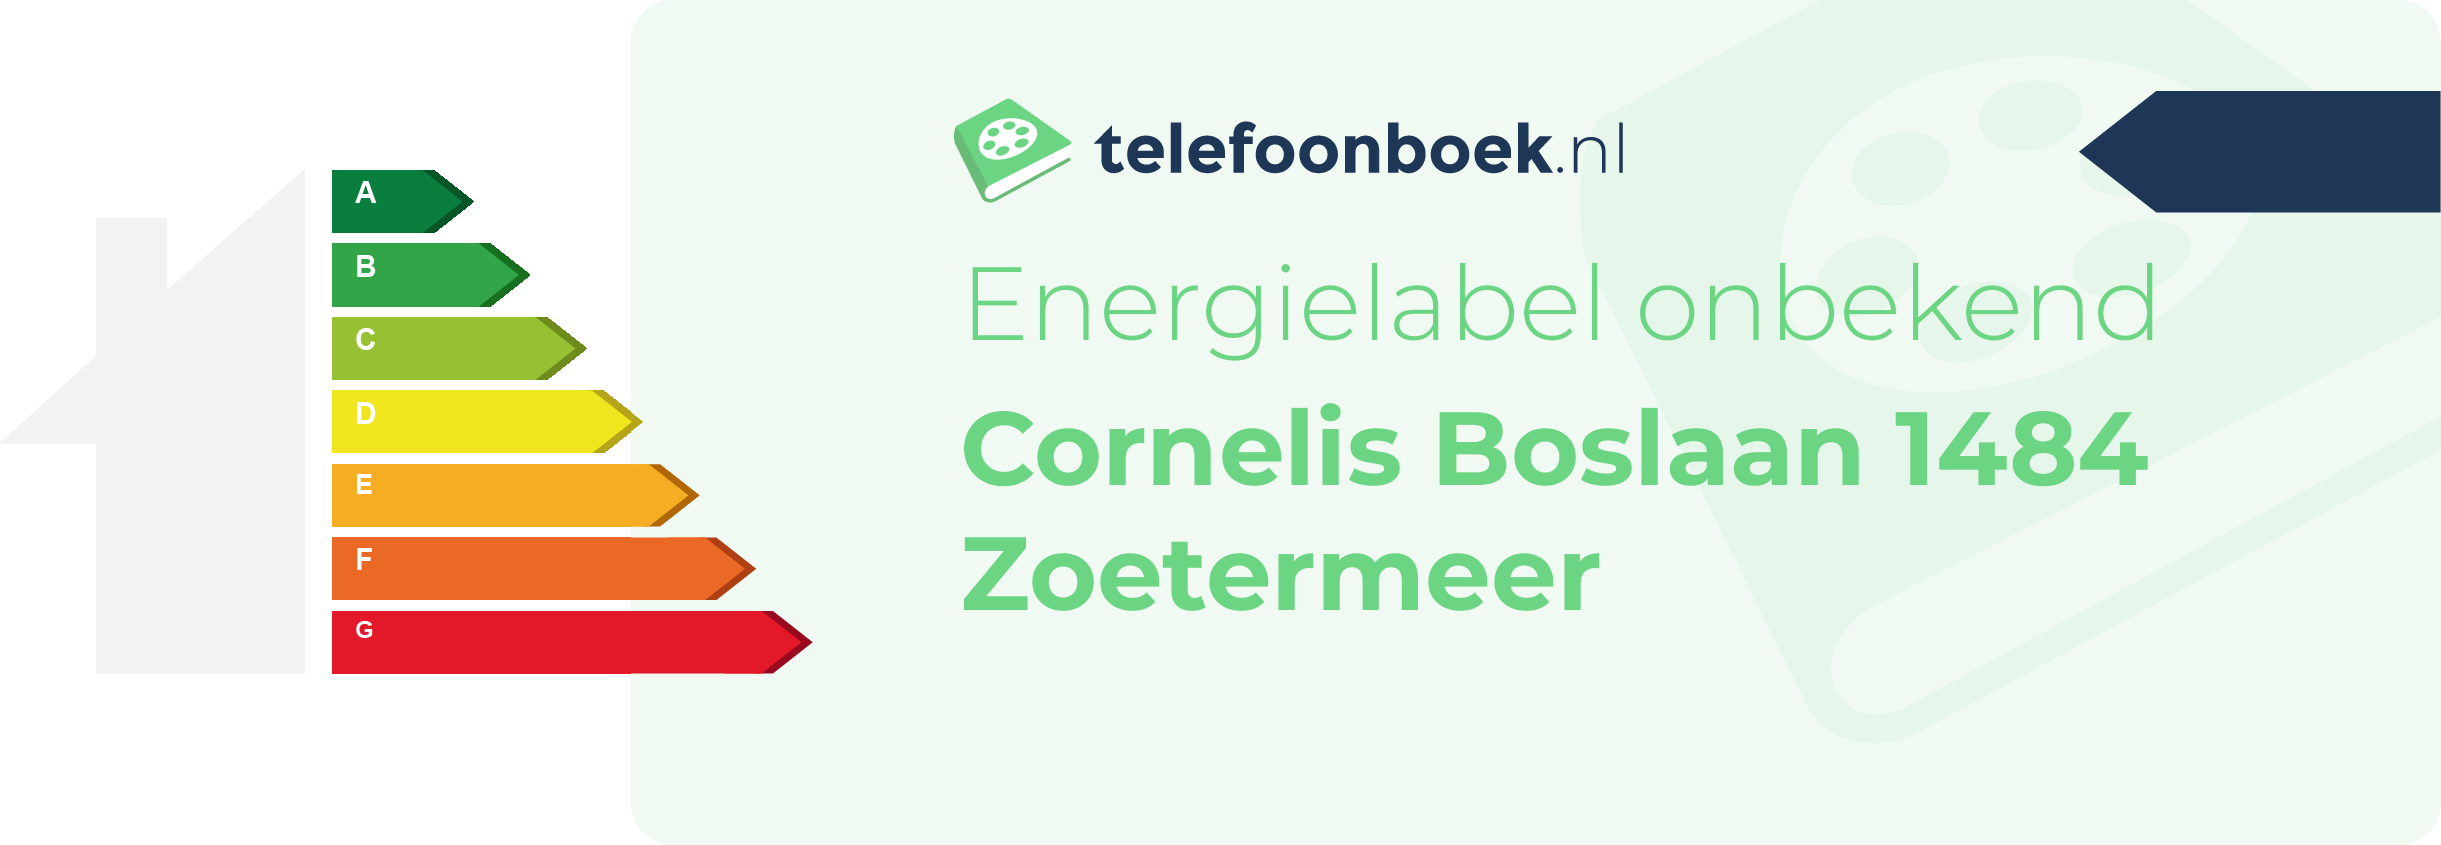 Energielabel Cornelis Boslaan 1484 Zoetermeer